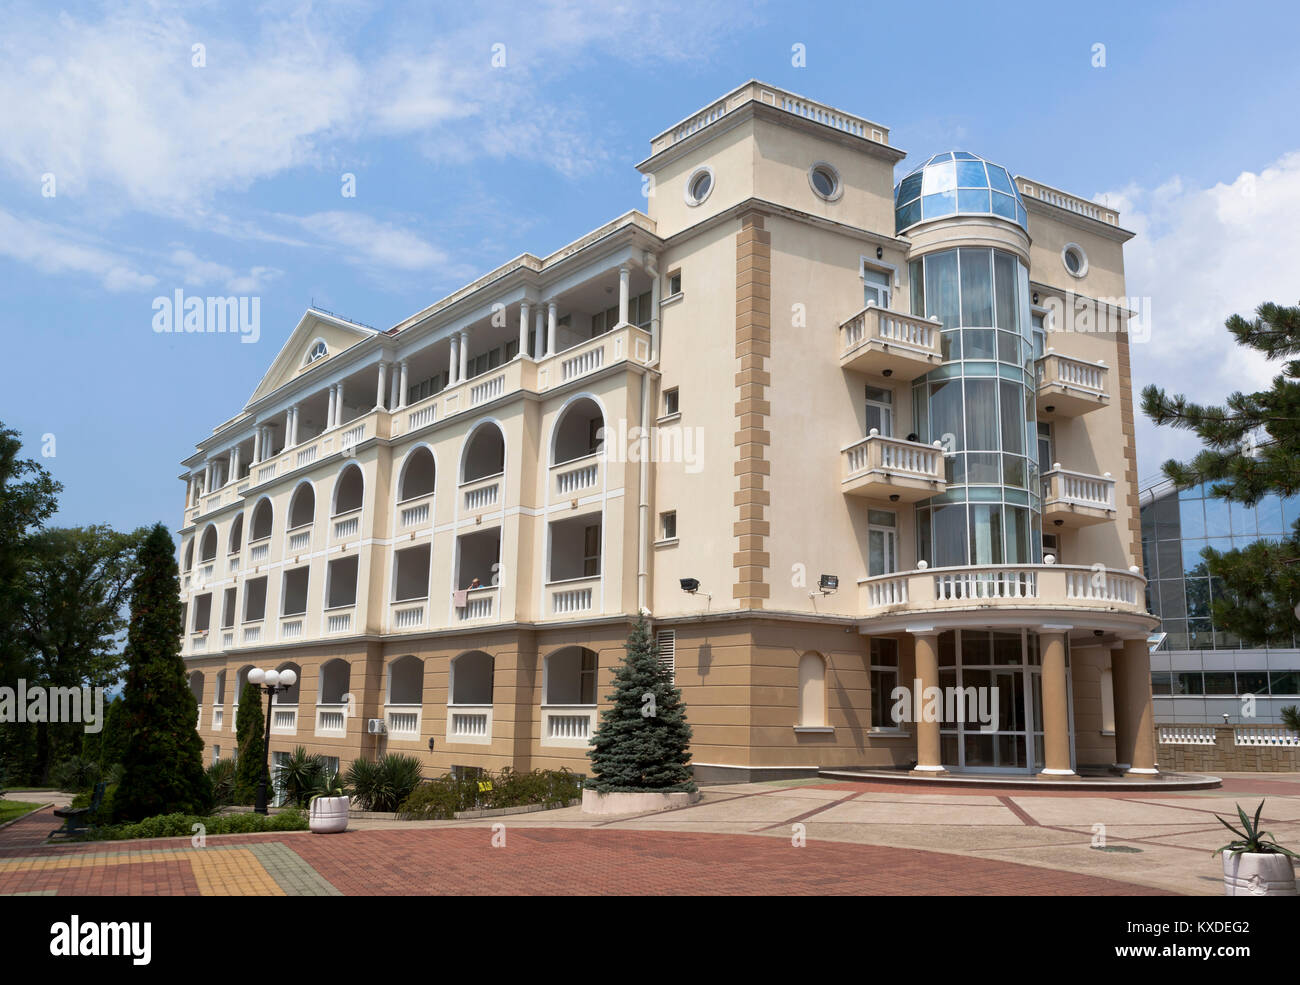 Dederkoy, Tuapse district, Krasnodar region, Russia - 14 July 2013: Residential building of the hotel Green Guy Tuapse Stock Photo